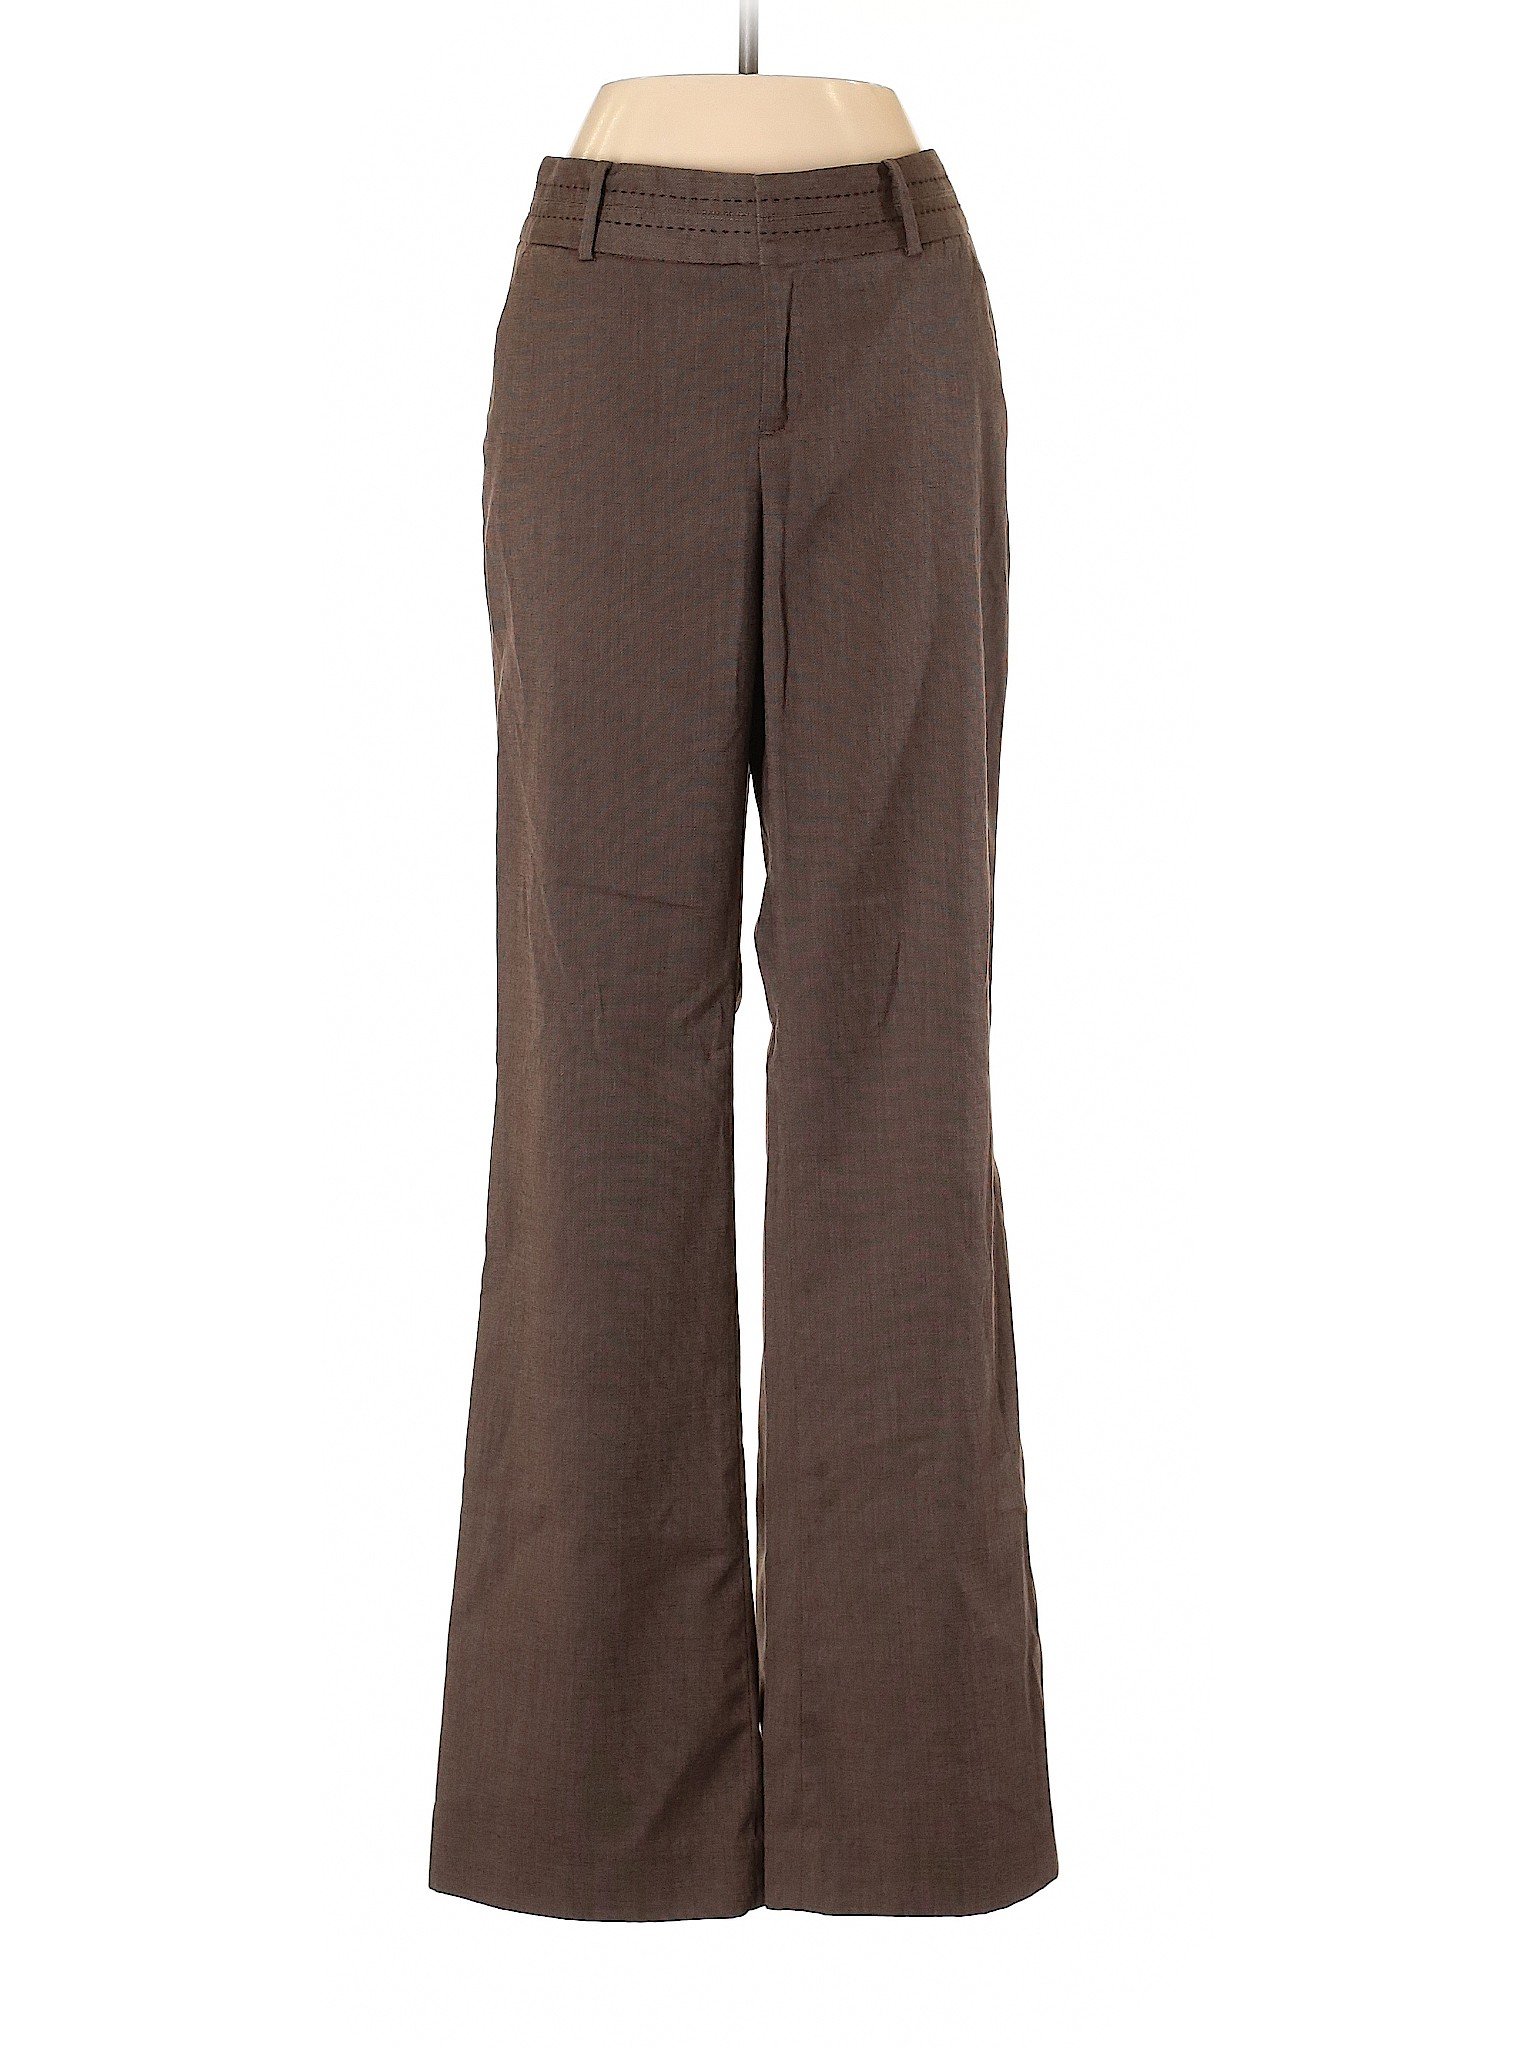 Banana Republic Factory Store Women Brown Dress Pants 4 | eBay